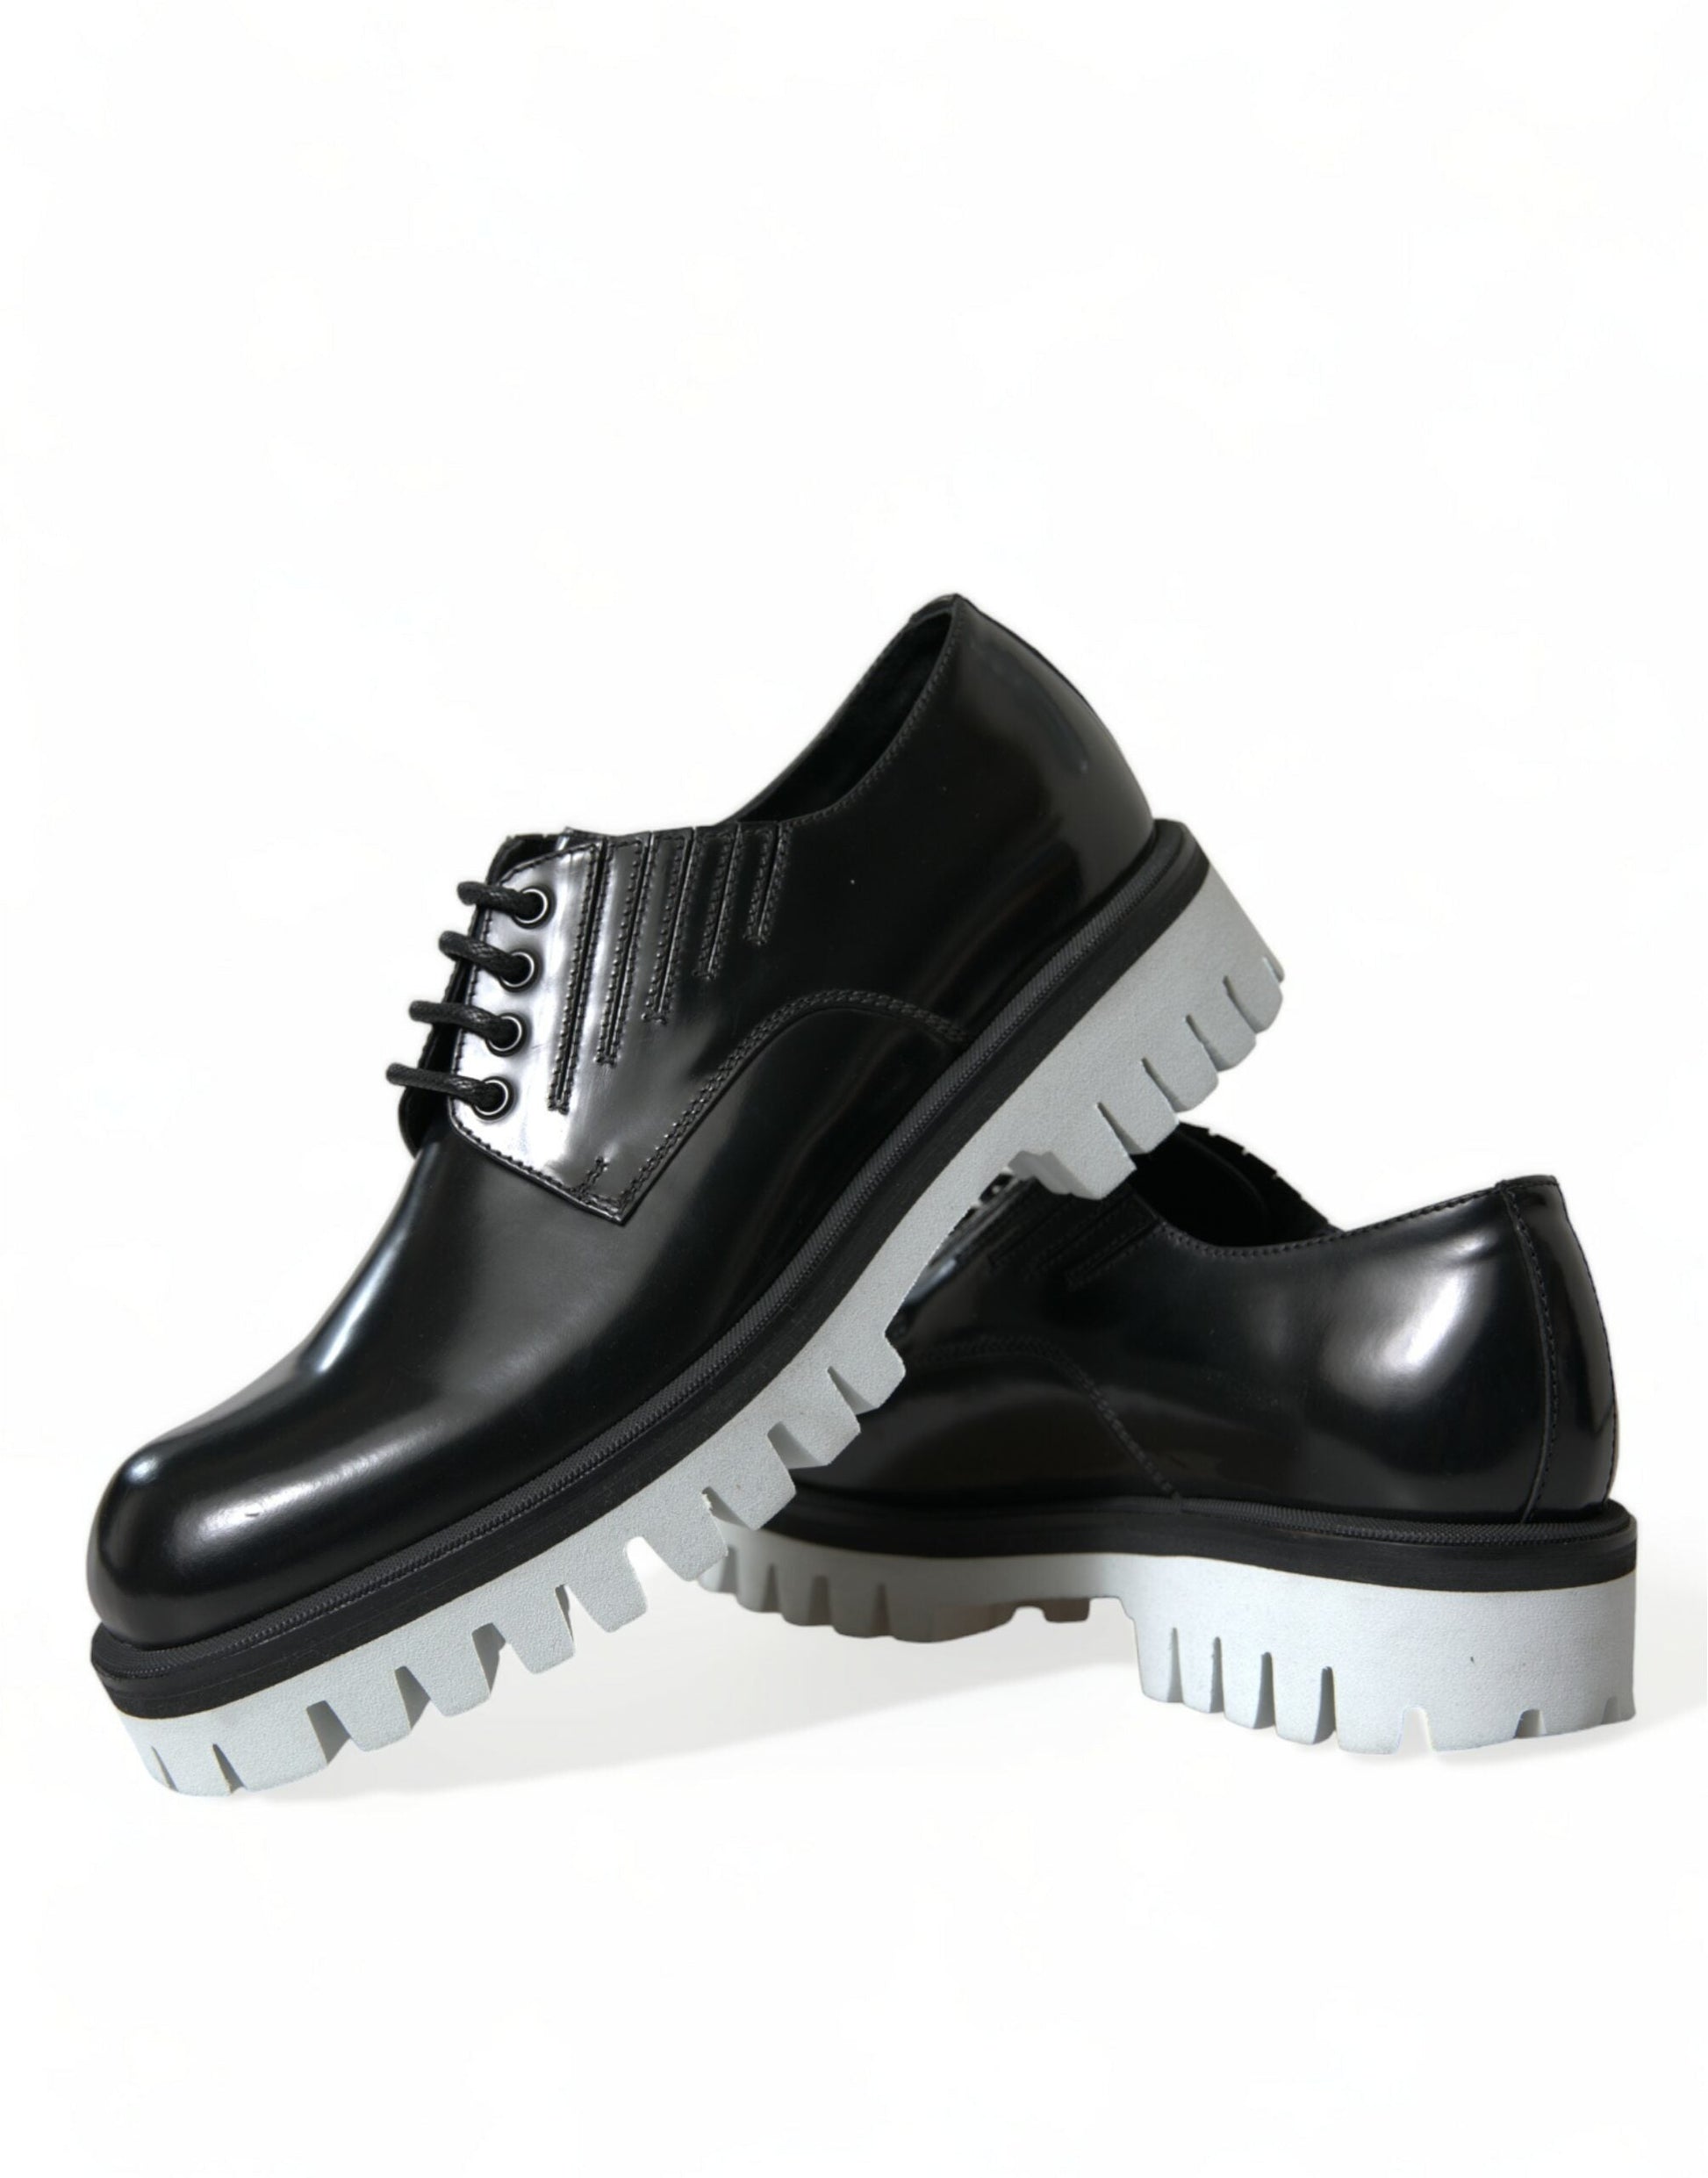 Dolce & Gabbana Black White Leather Lace Up Derby Dress Shoes | Fashionsarah.com